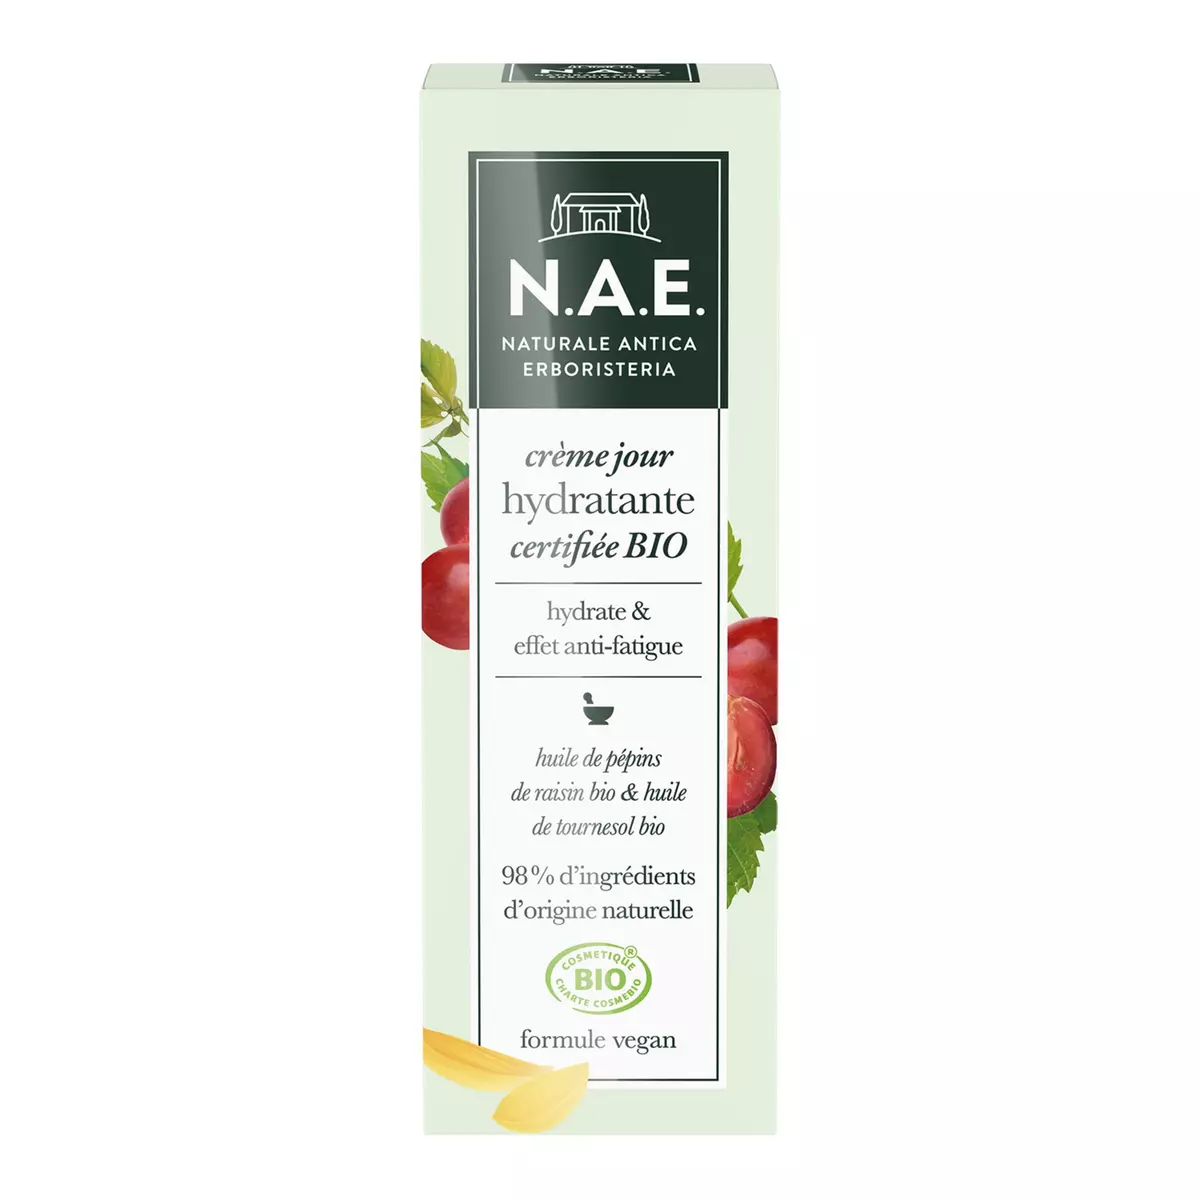 N.A.E Crème jour hydratante bio et vegan huile de raisin & tournesol bio 50ml